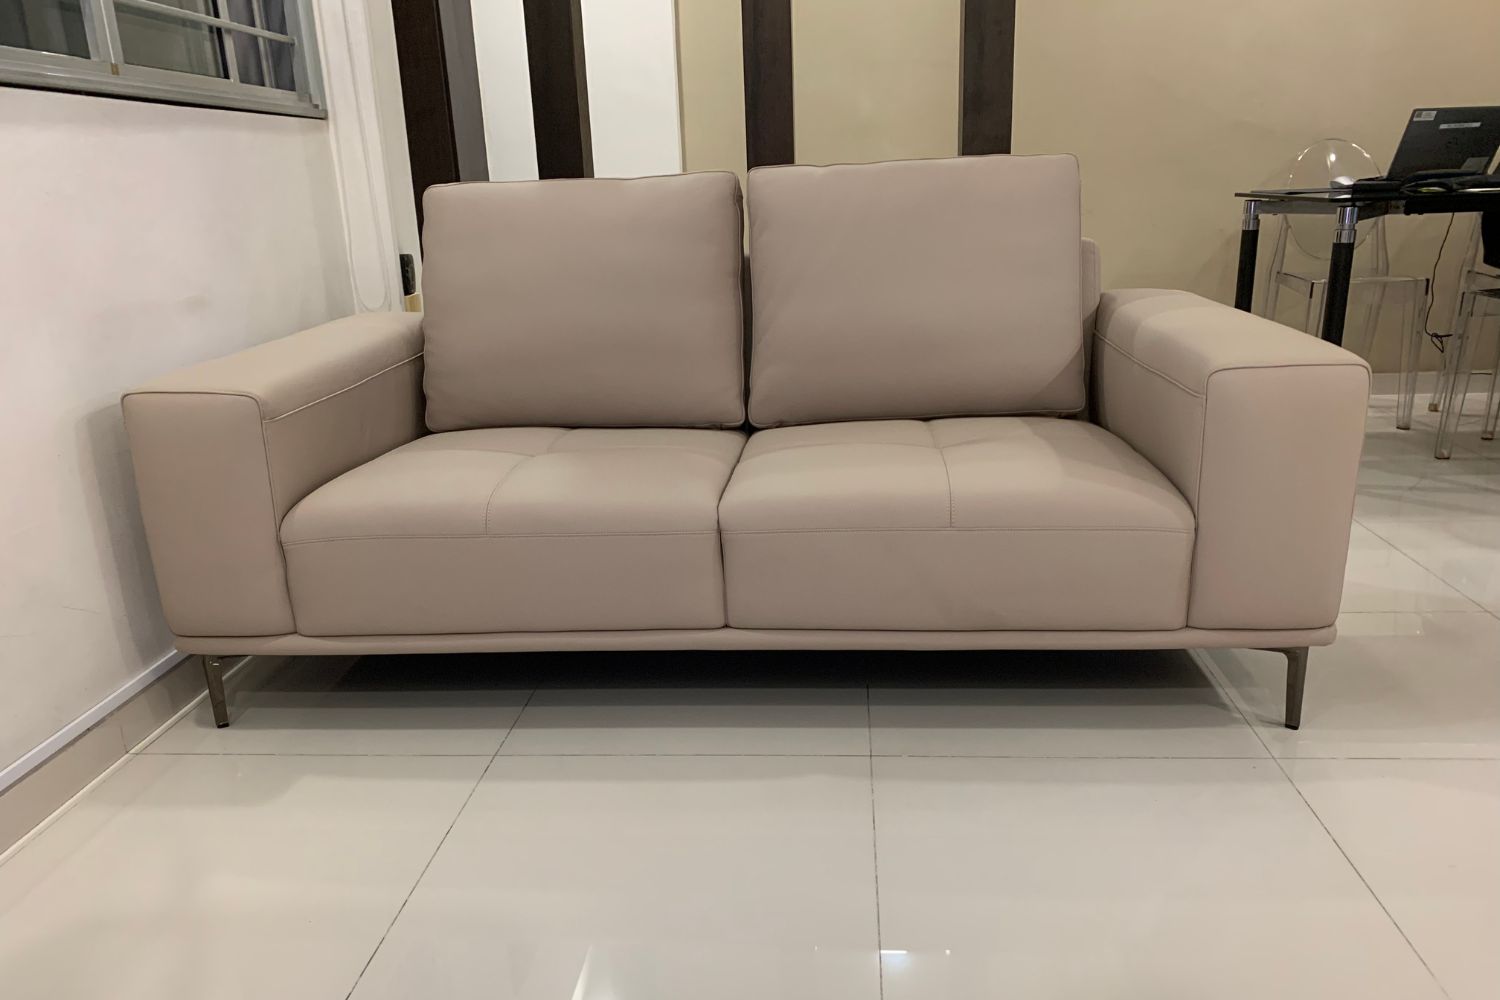 Calm 190cm beige half leather sofa in real customer's home